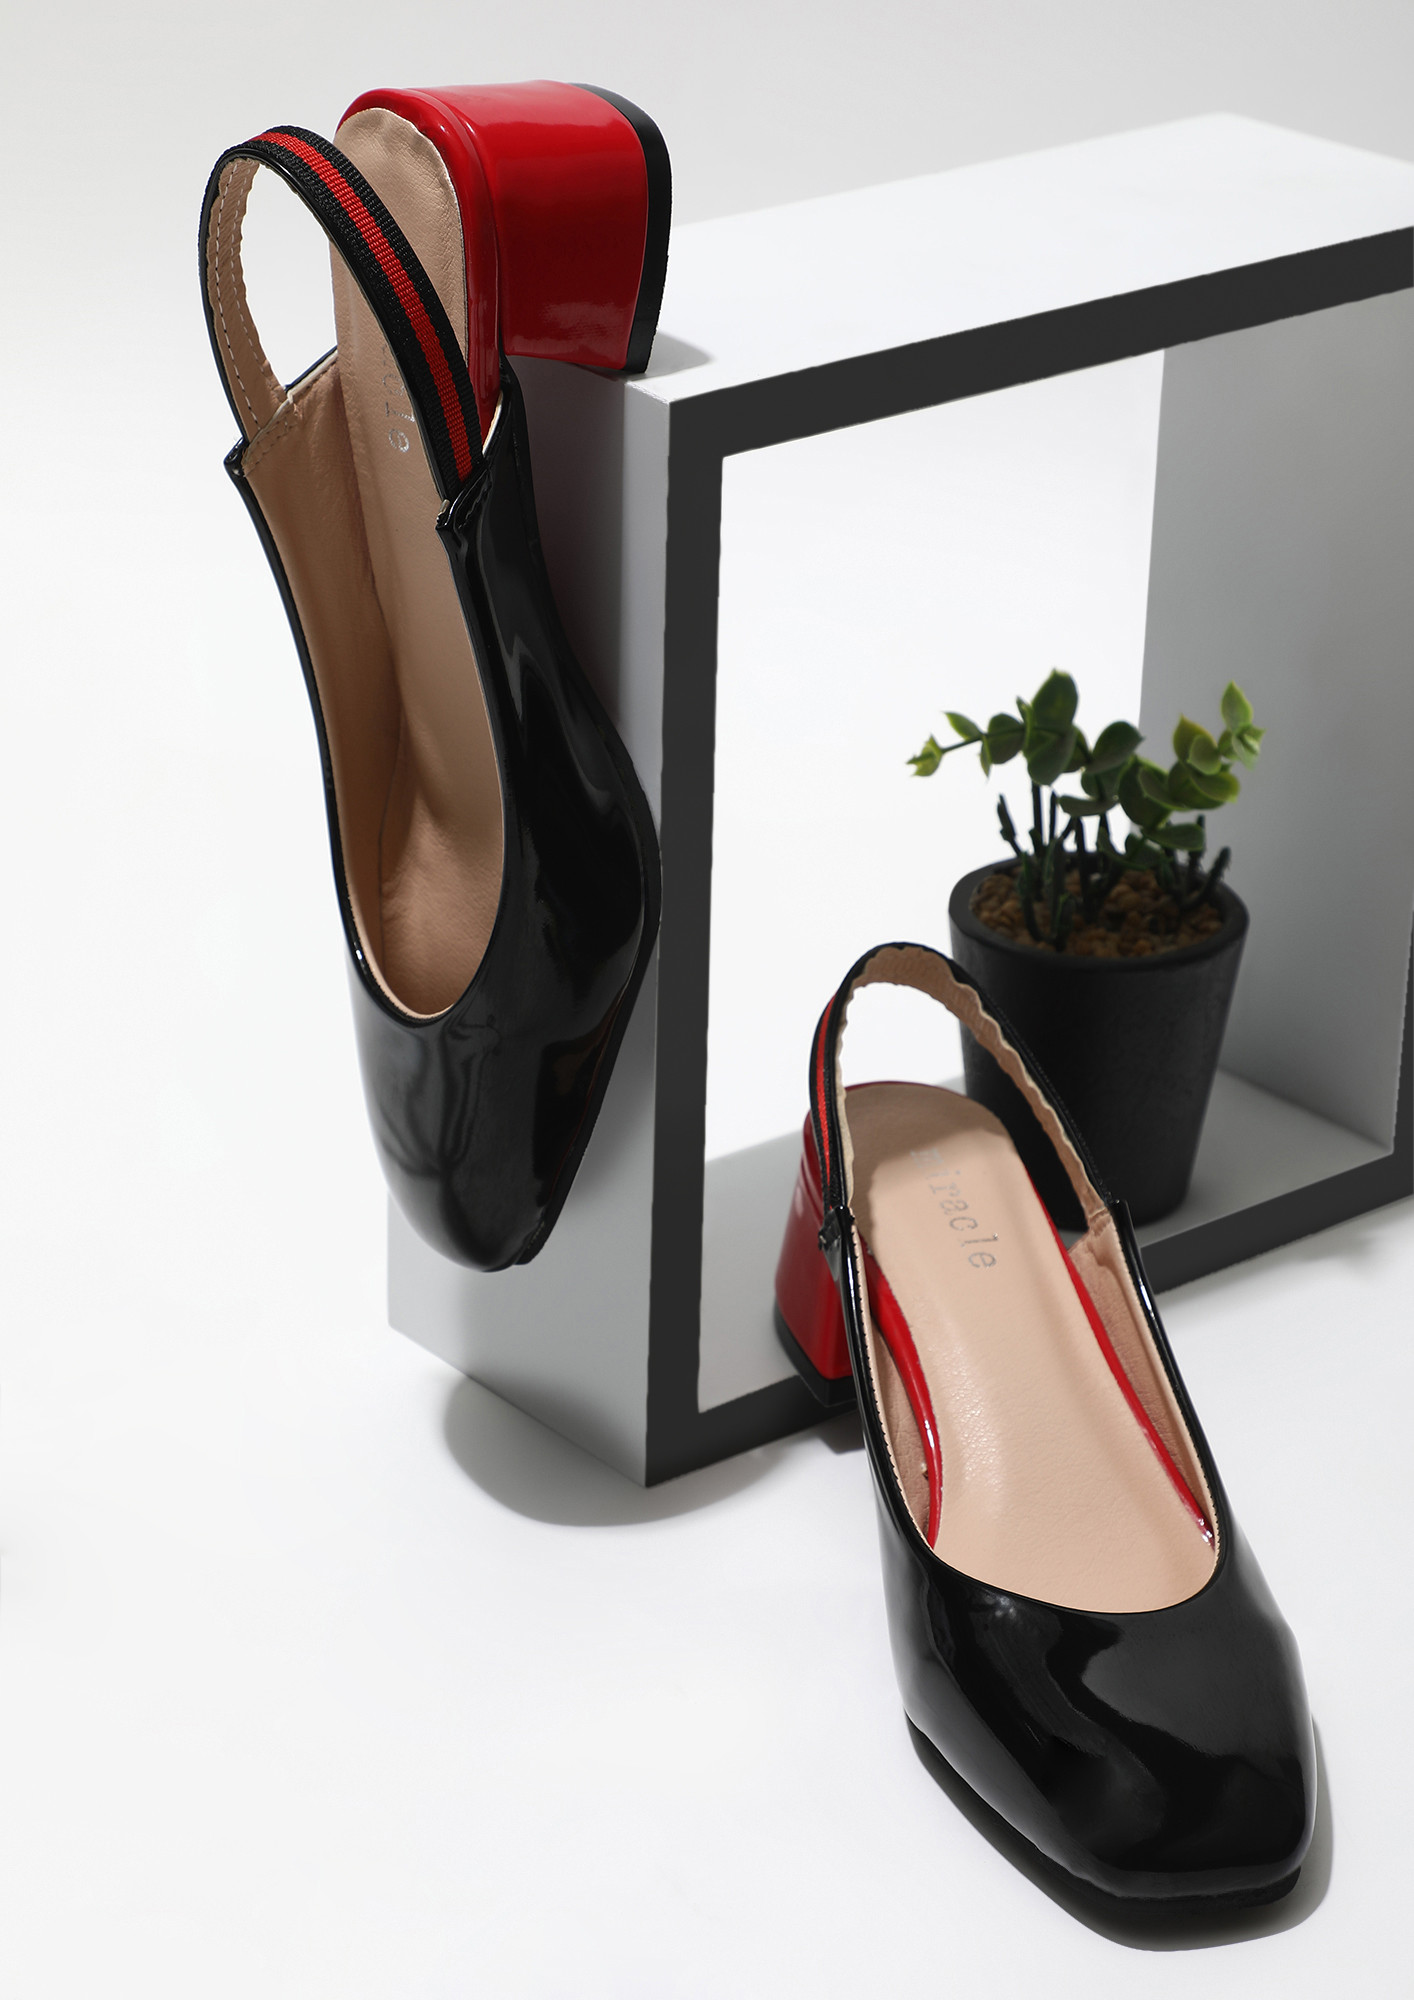 Buy Womens Black Strappy Heels Online At Famous Footwear